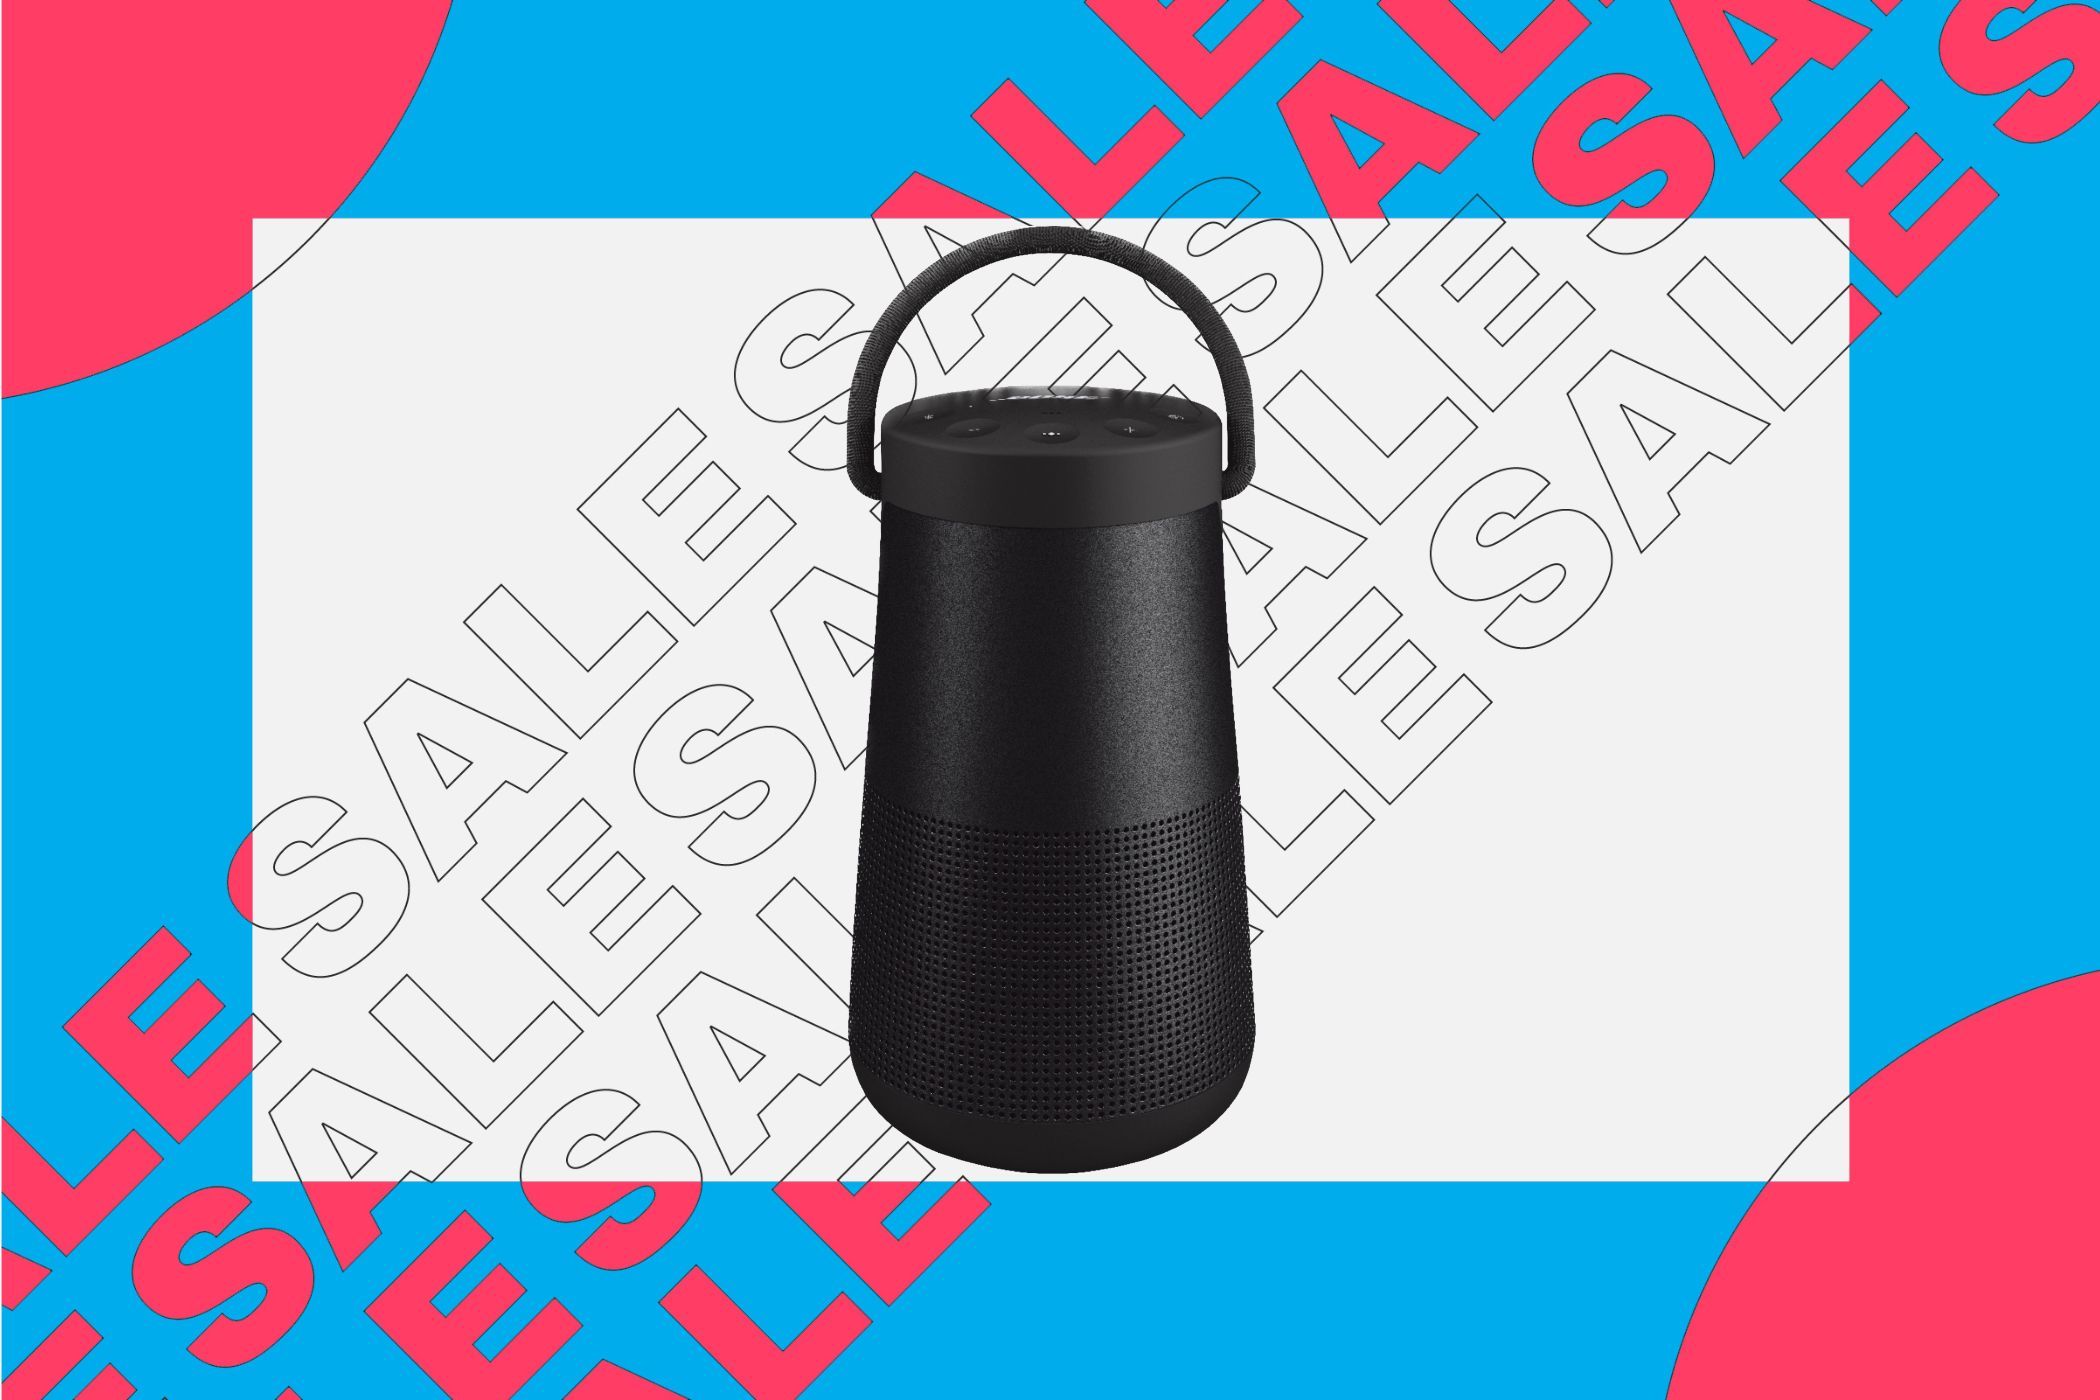 A render of the Bose SoundLink Revolve 2 Series 2 speaker with sale illustration in the background.